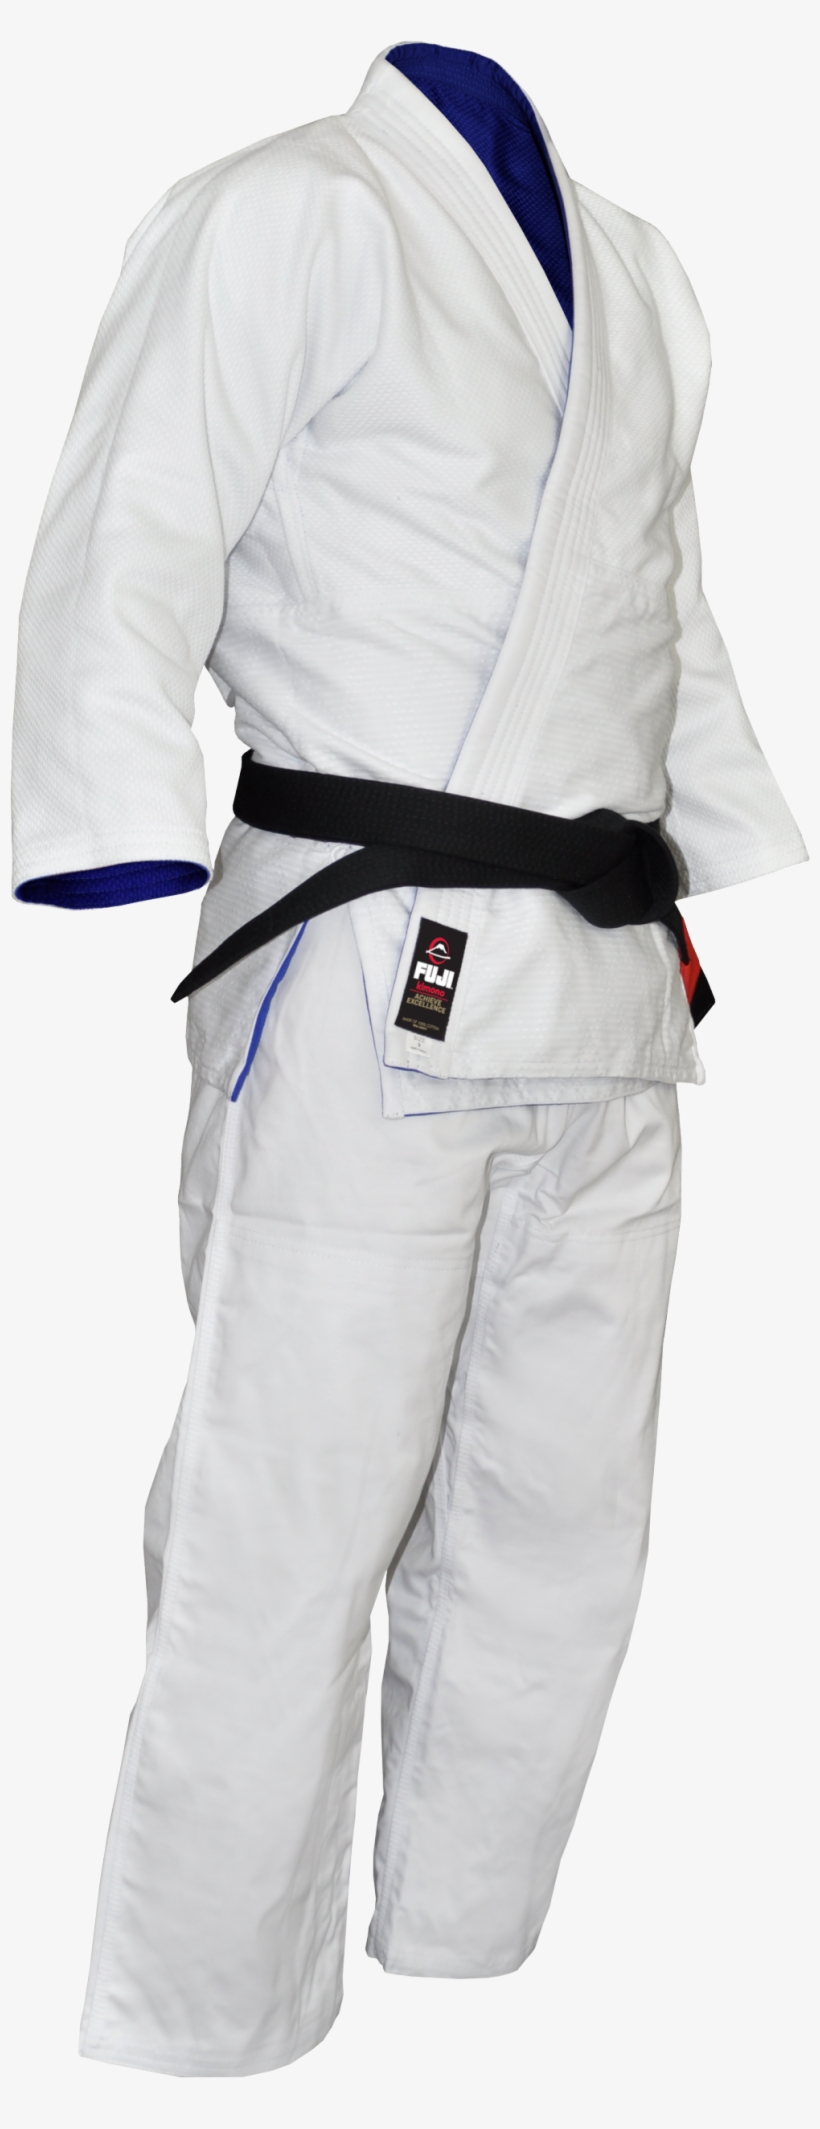 Res - - - Size - 2521 Kb - Fuji Reversible Judo Uniform Blue And White 2, transparent png #3396924